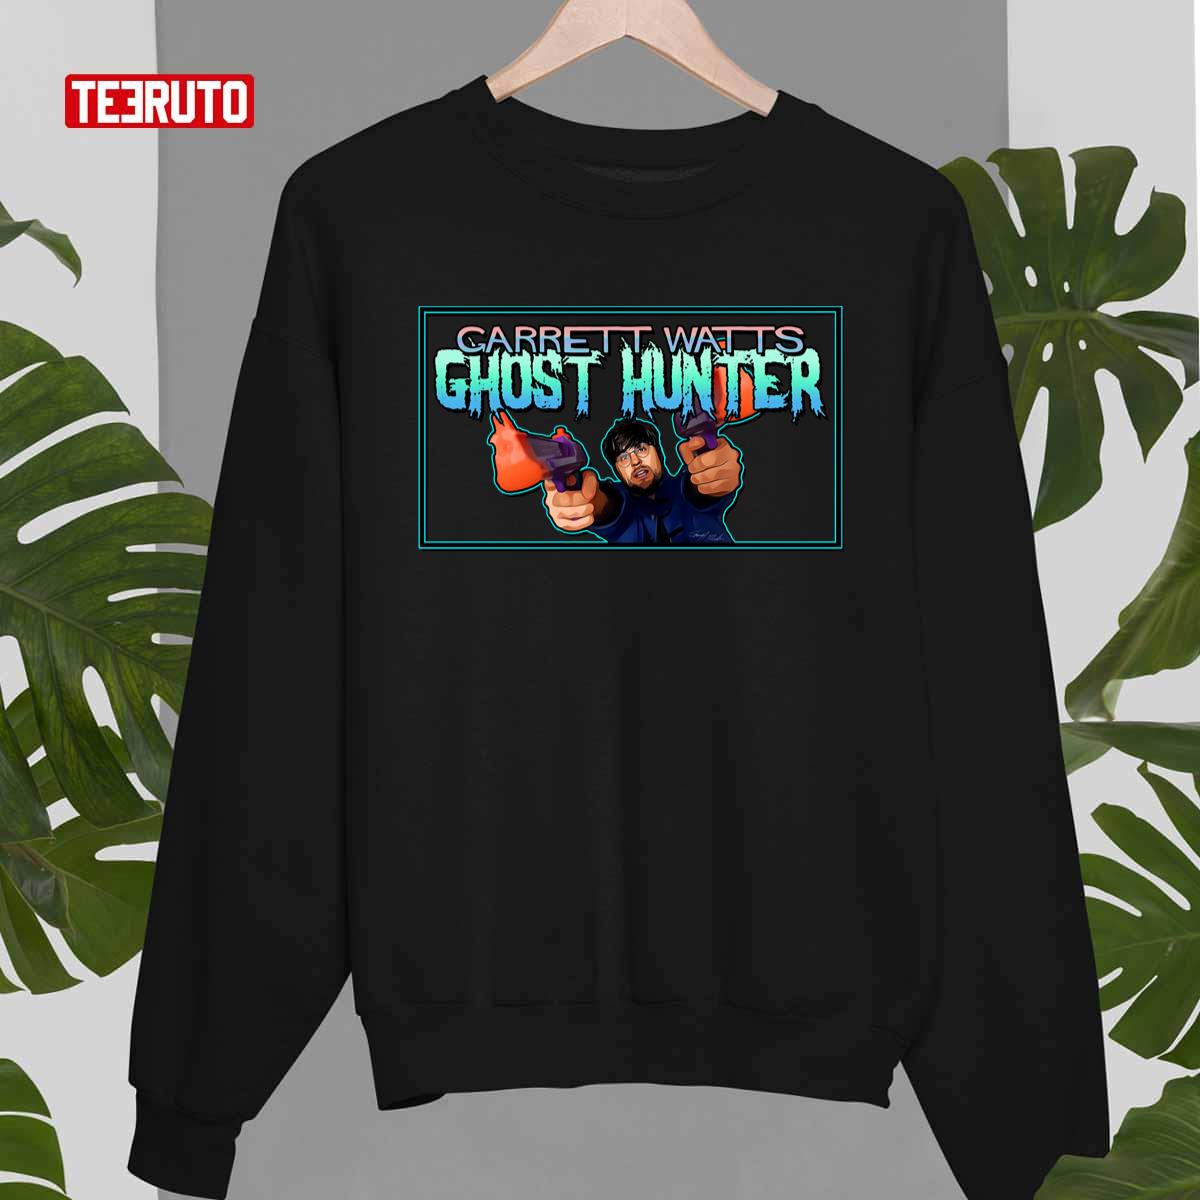 Ghost Hunter Garrett Watts Unisex T-Shirt